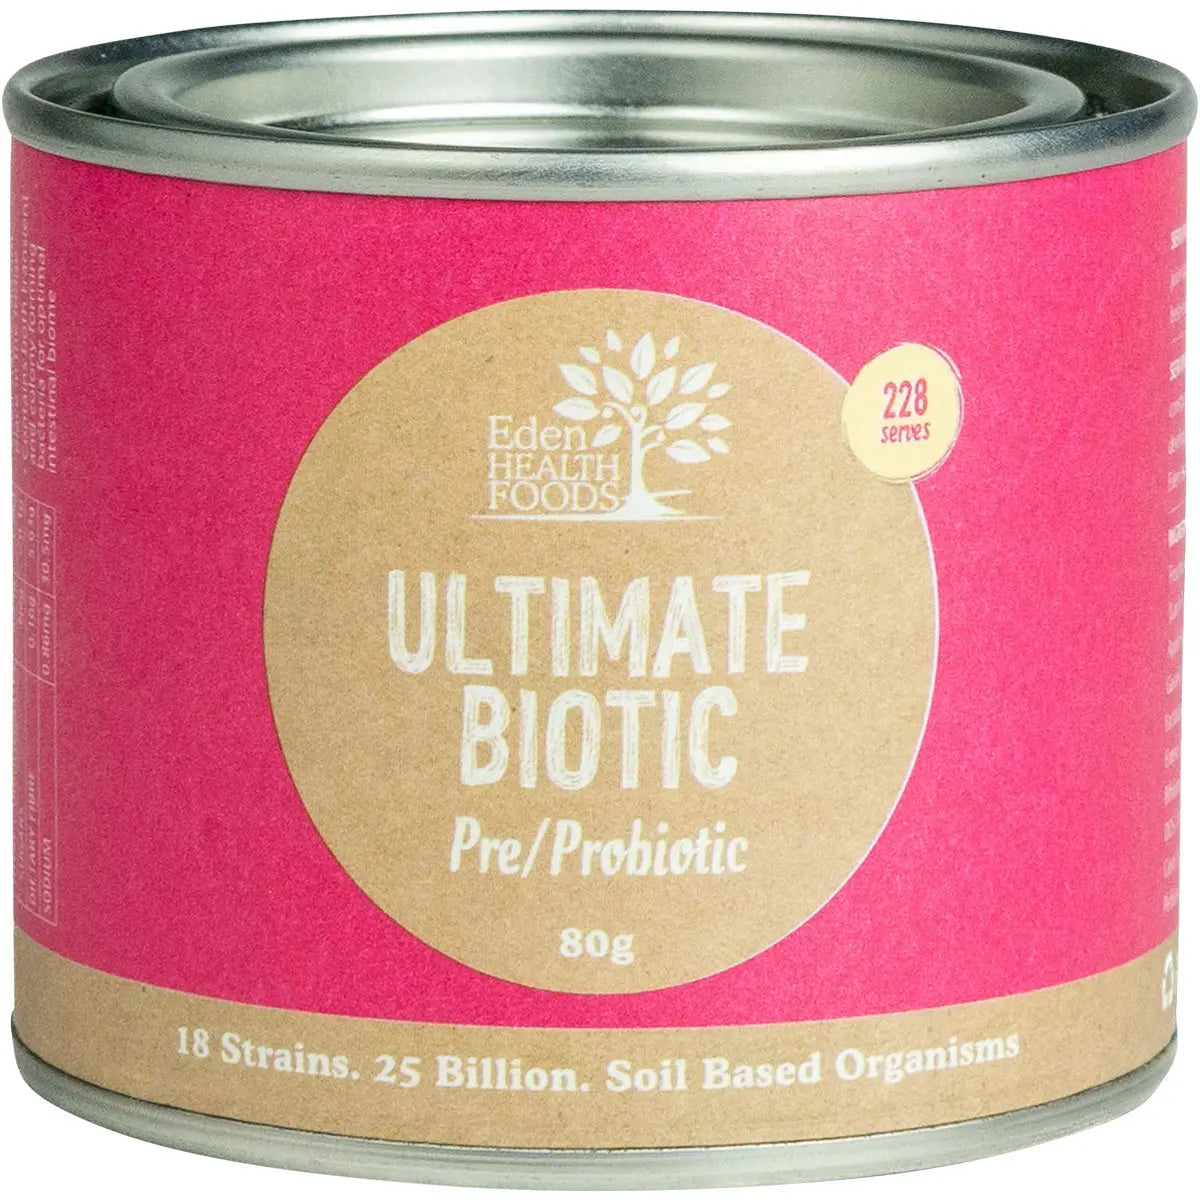 Ultimate Biotic Pre/Probiotic 80g